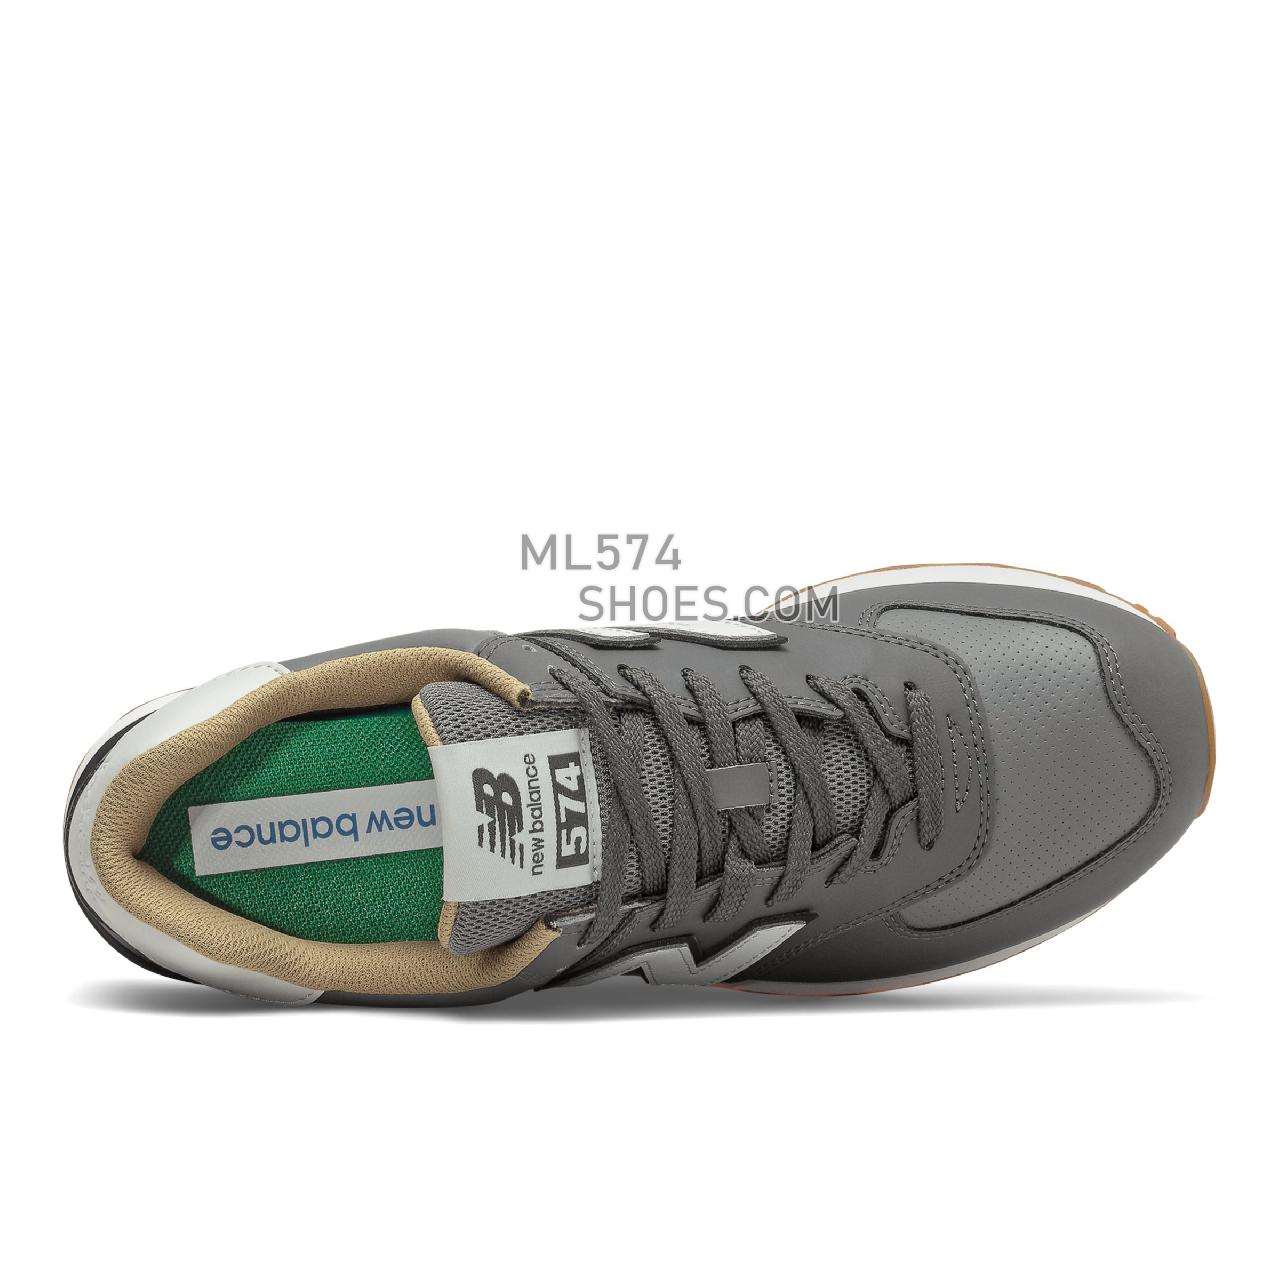 New Balance 574 - Unisex Men's Women's Classic Sneakers - Magnet with Castlerock - U574VR2